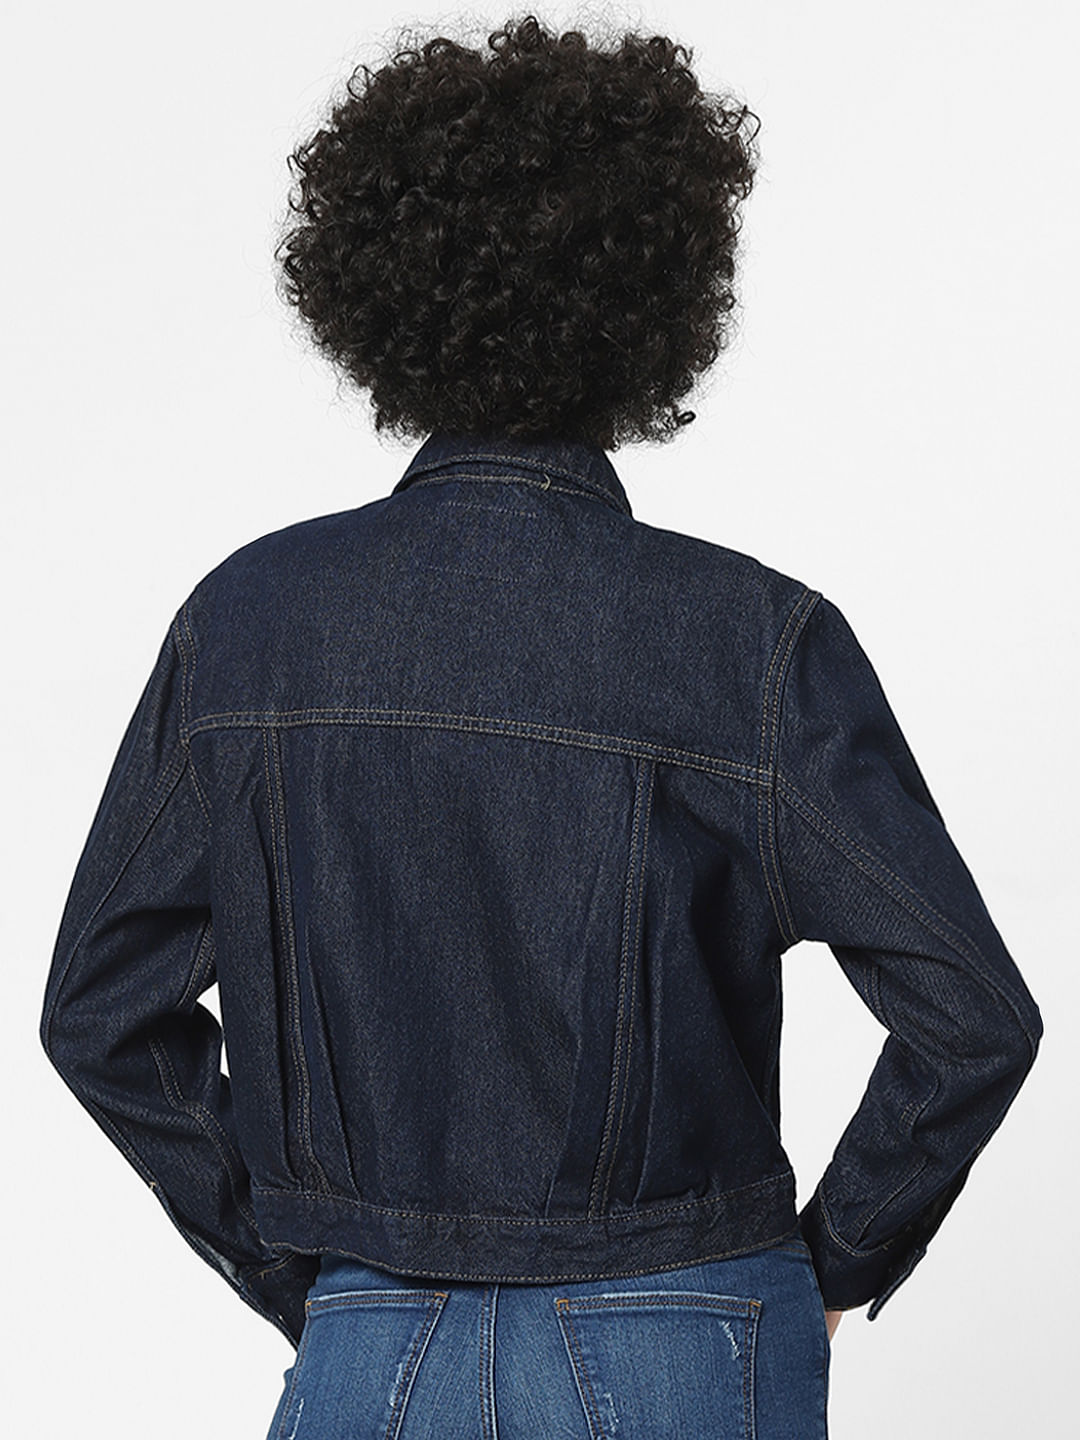 Buy Fashion Hub Creations Full Sleeves Solid Women's Denim Jacket (Large,  Black) at Amazon.in